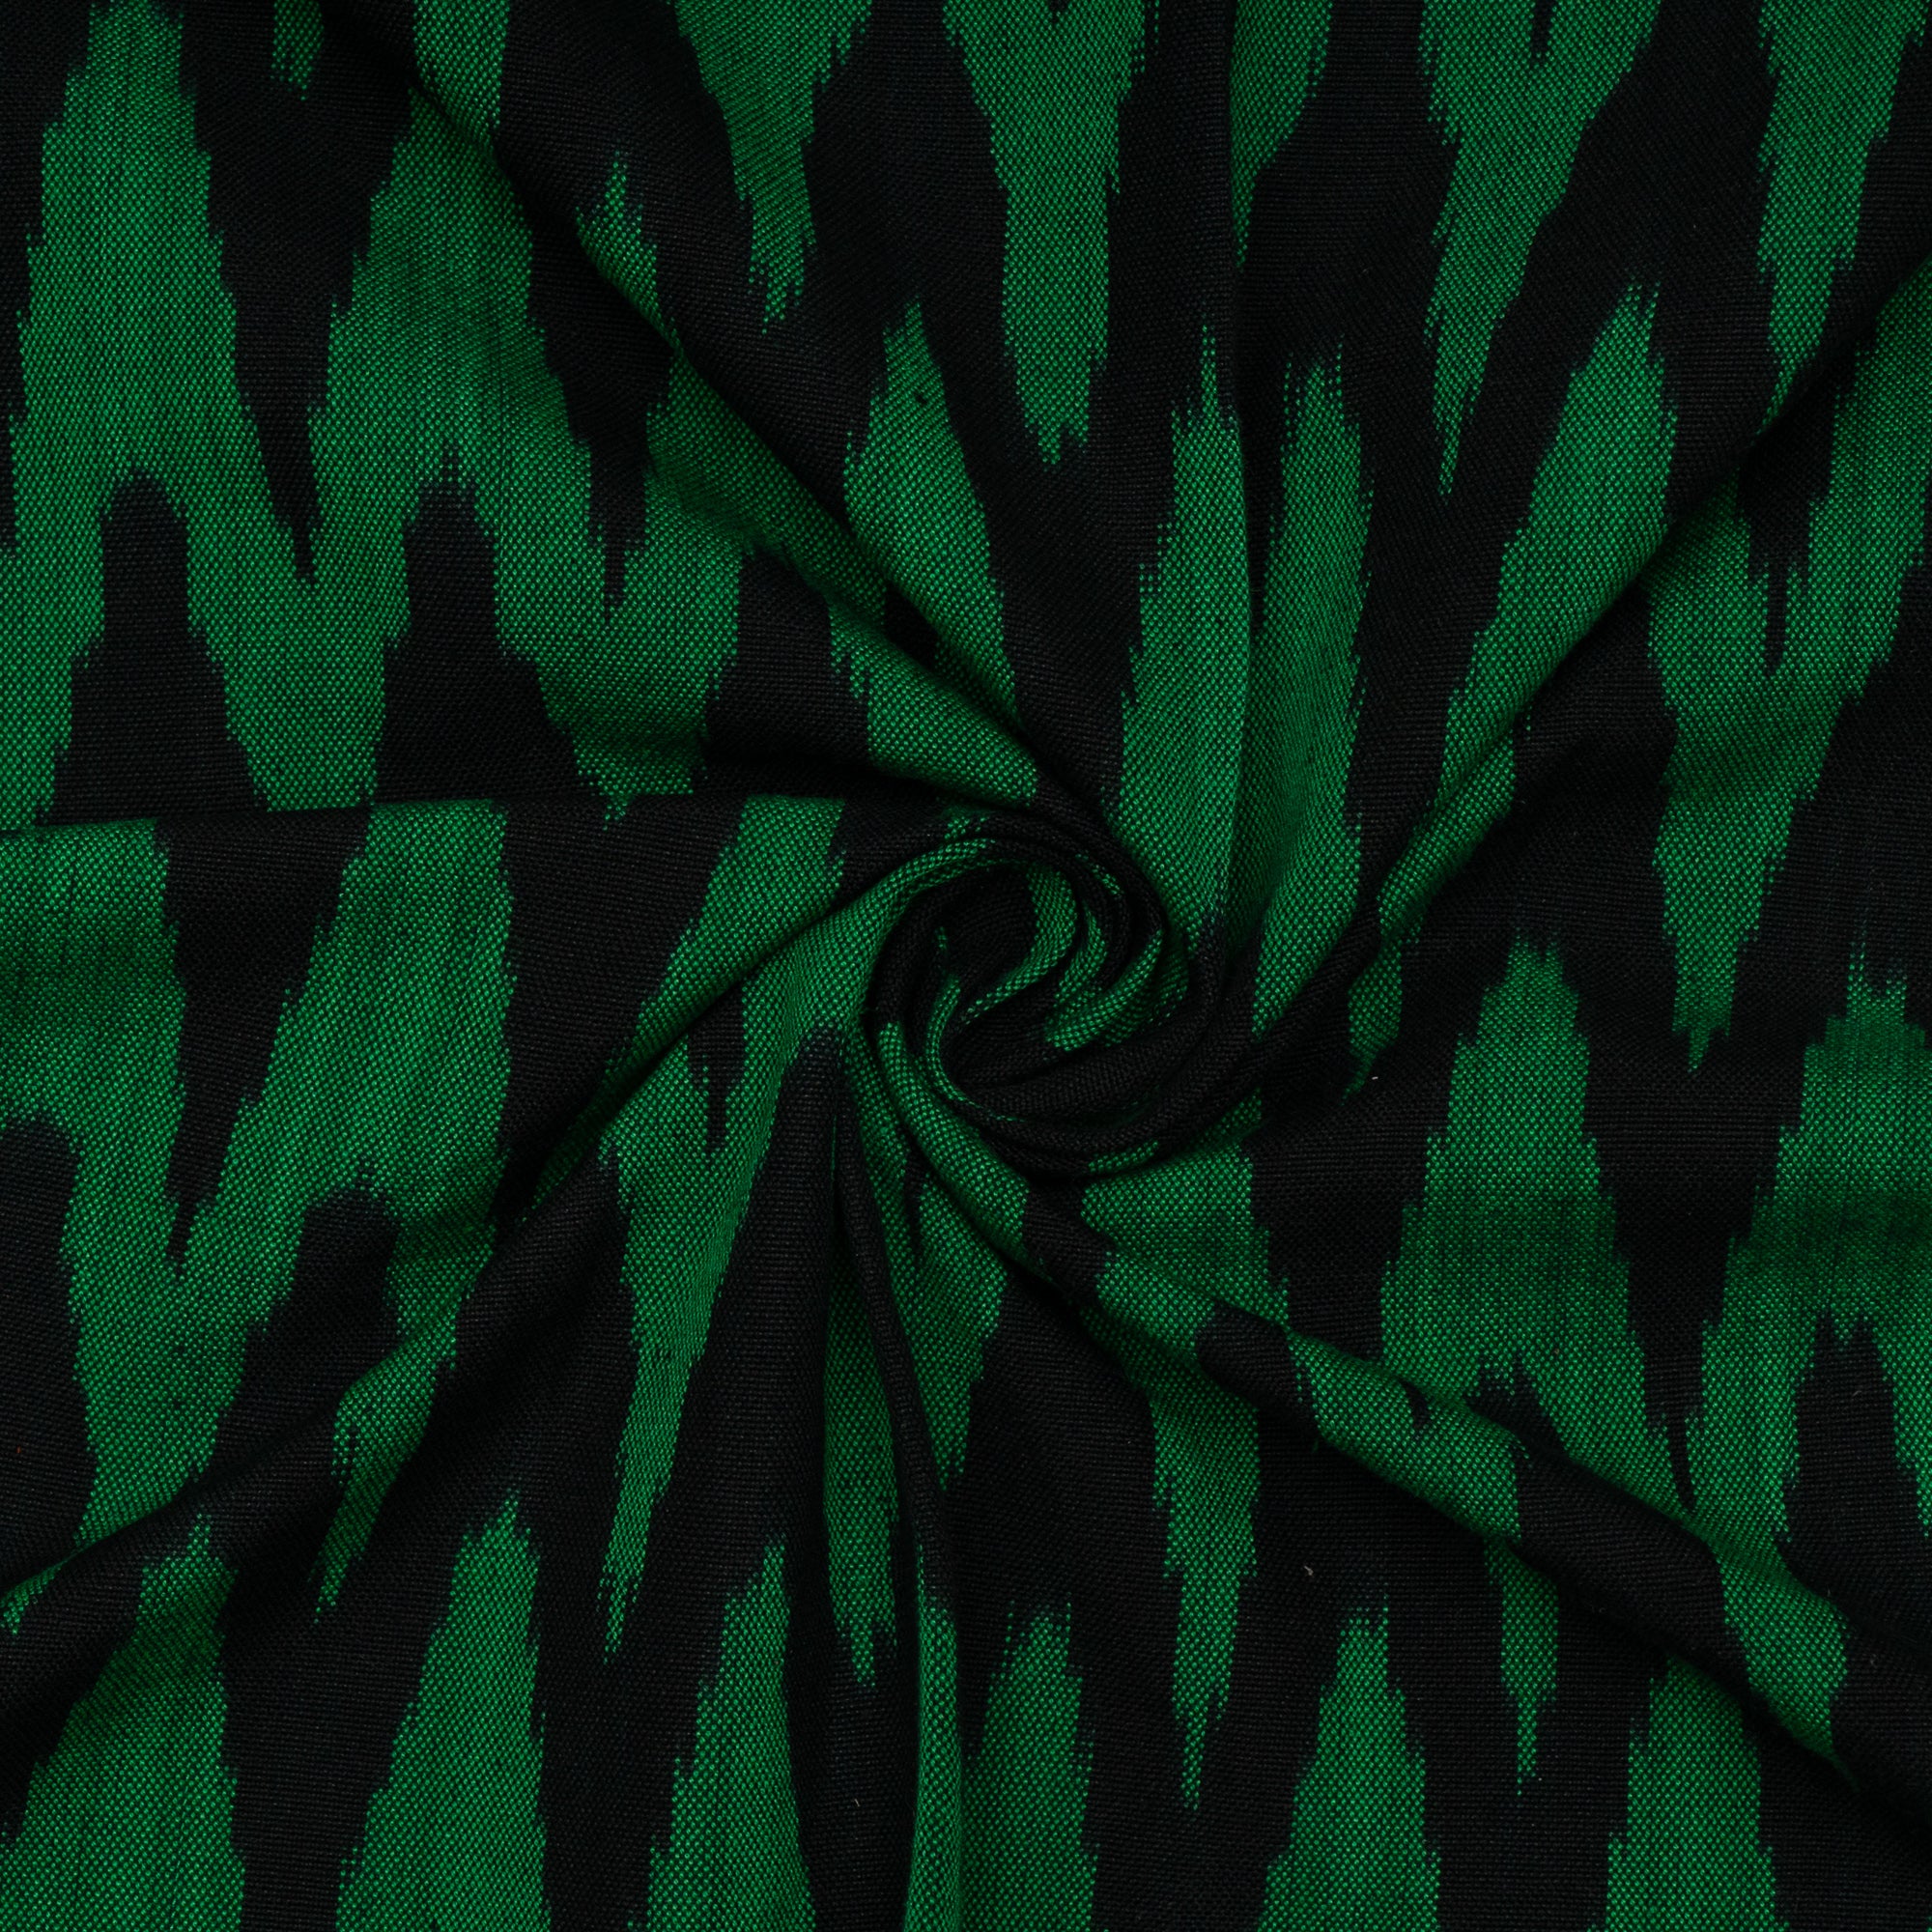 Green & Black Chevron Thick Cotton Handloom Ikat (Sku: IKK-535)